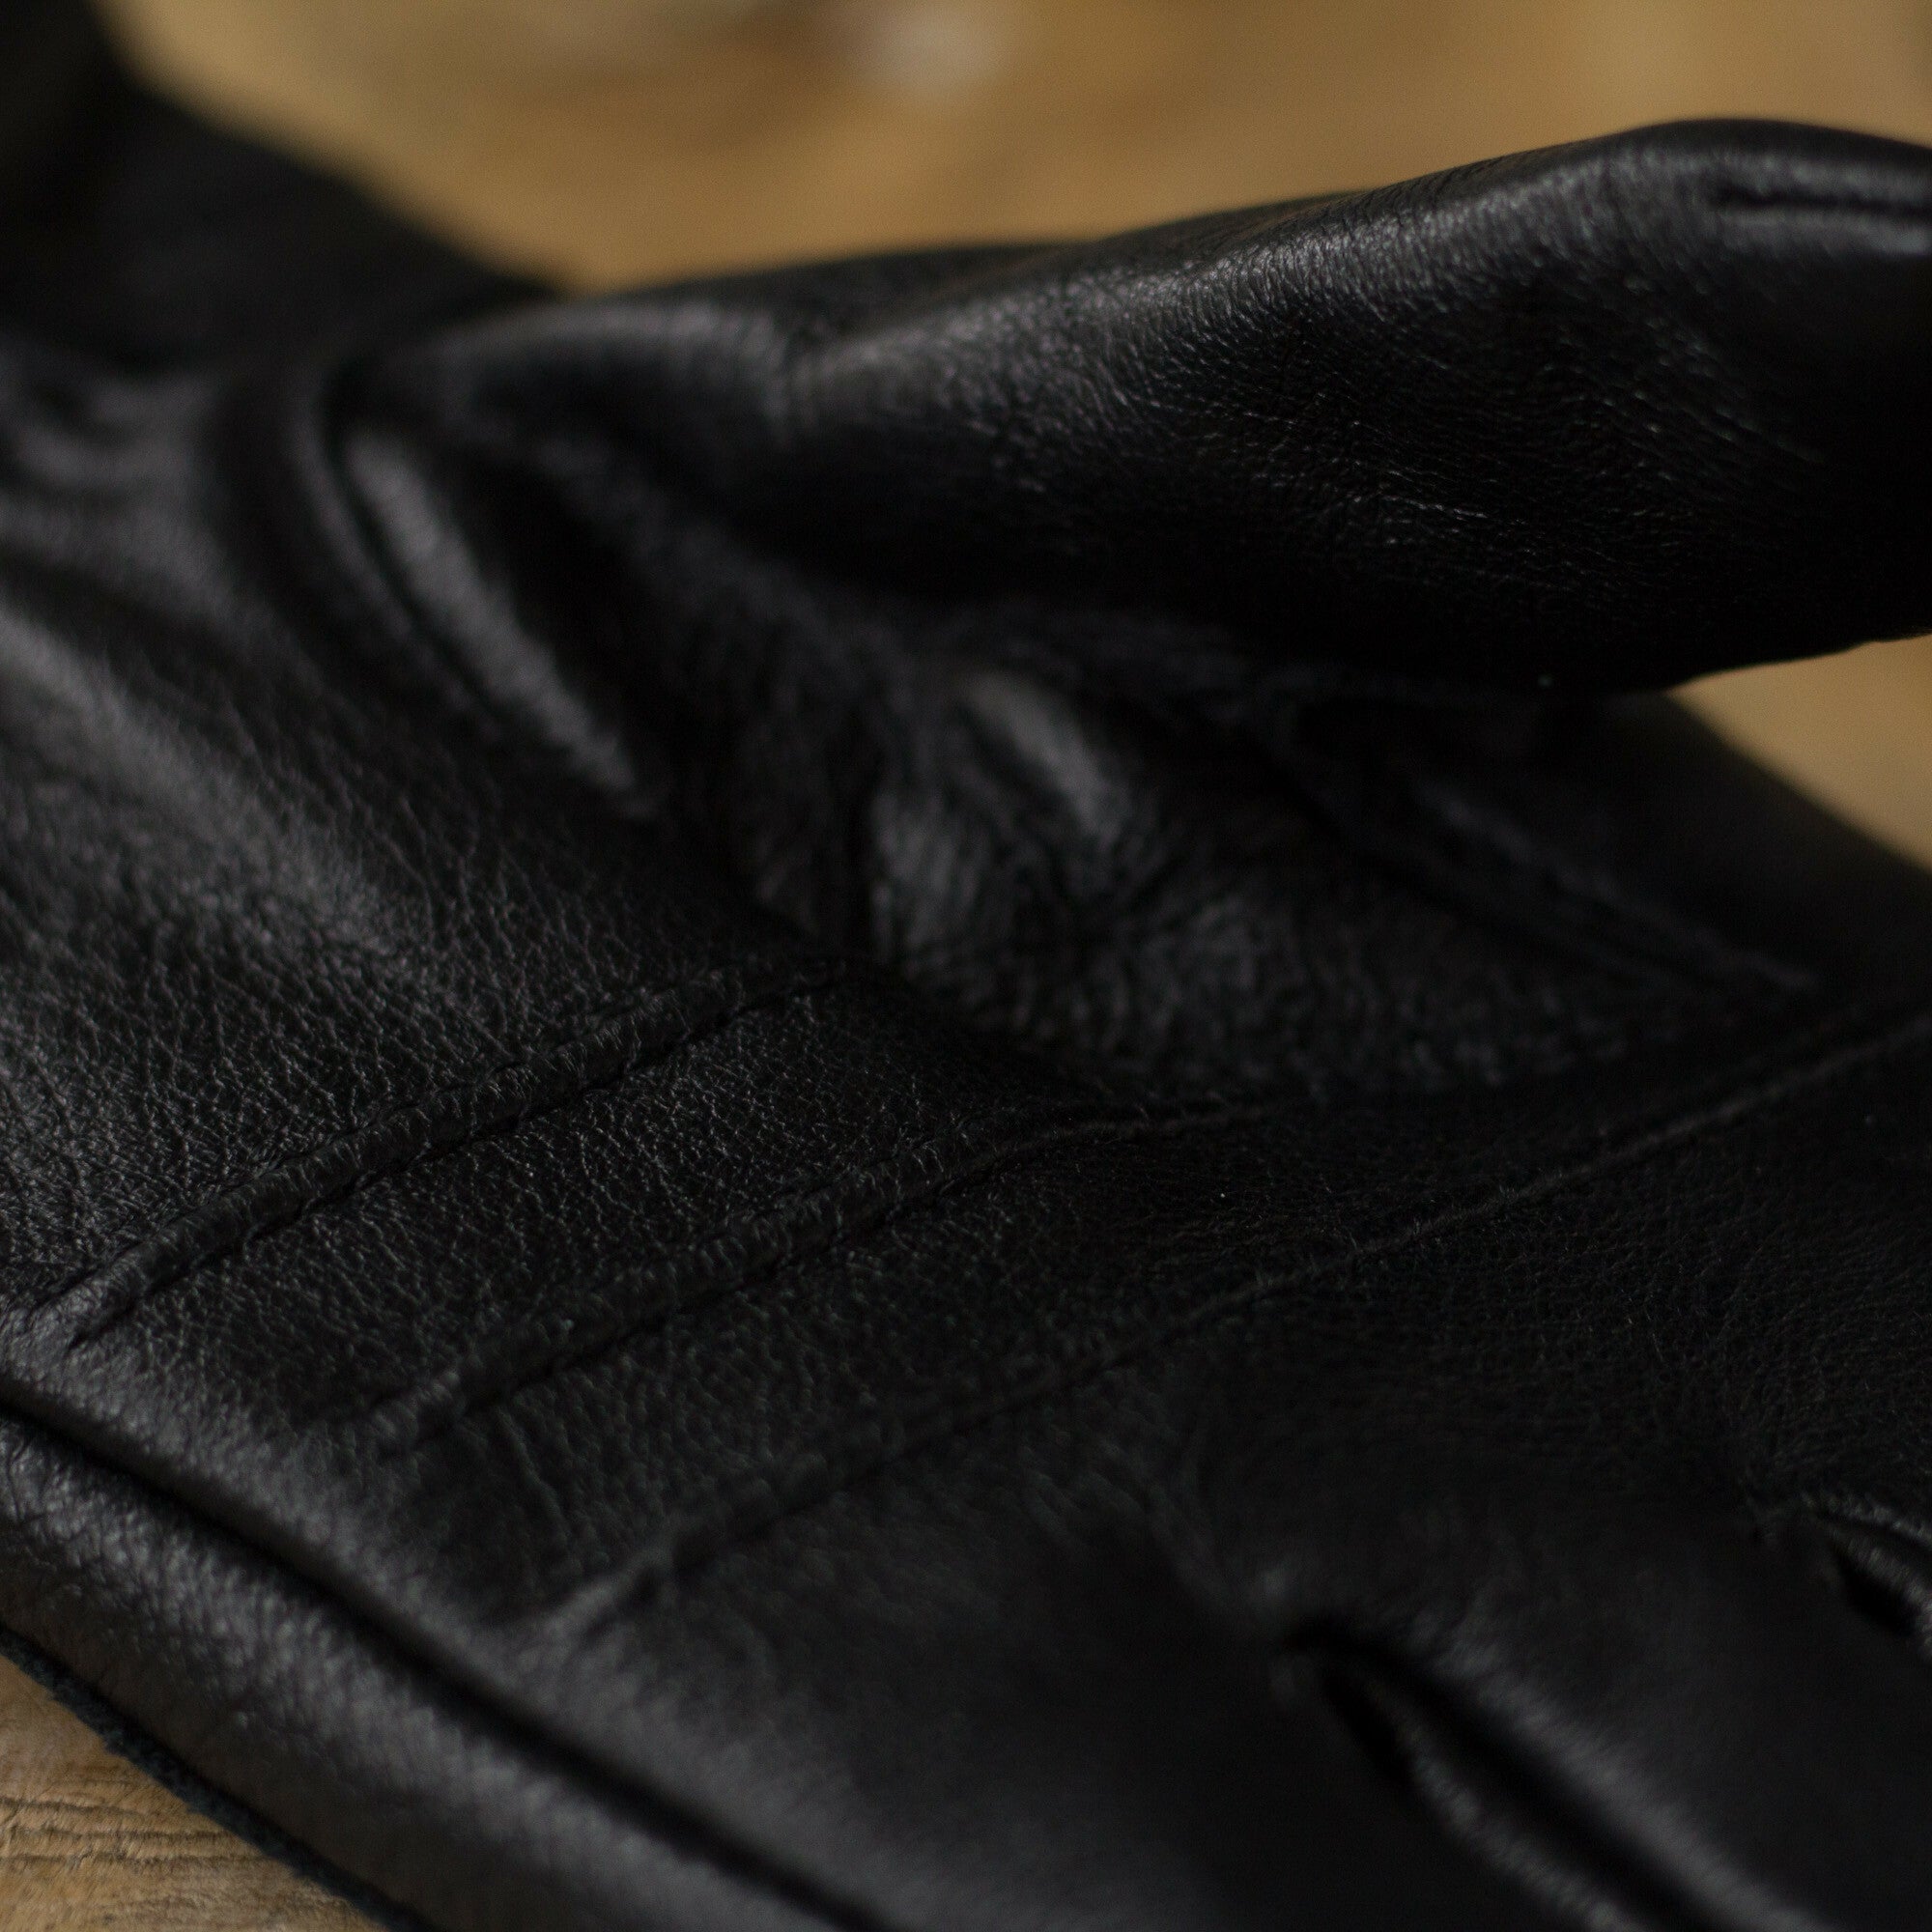 Gloves Tallberg - BLACK